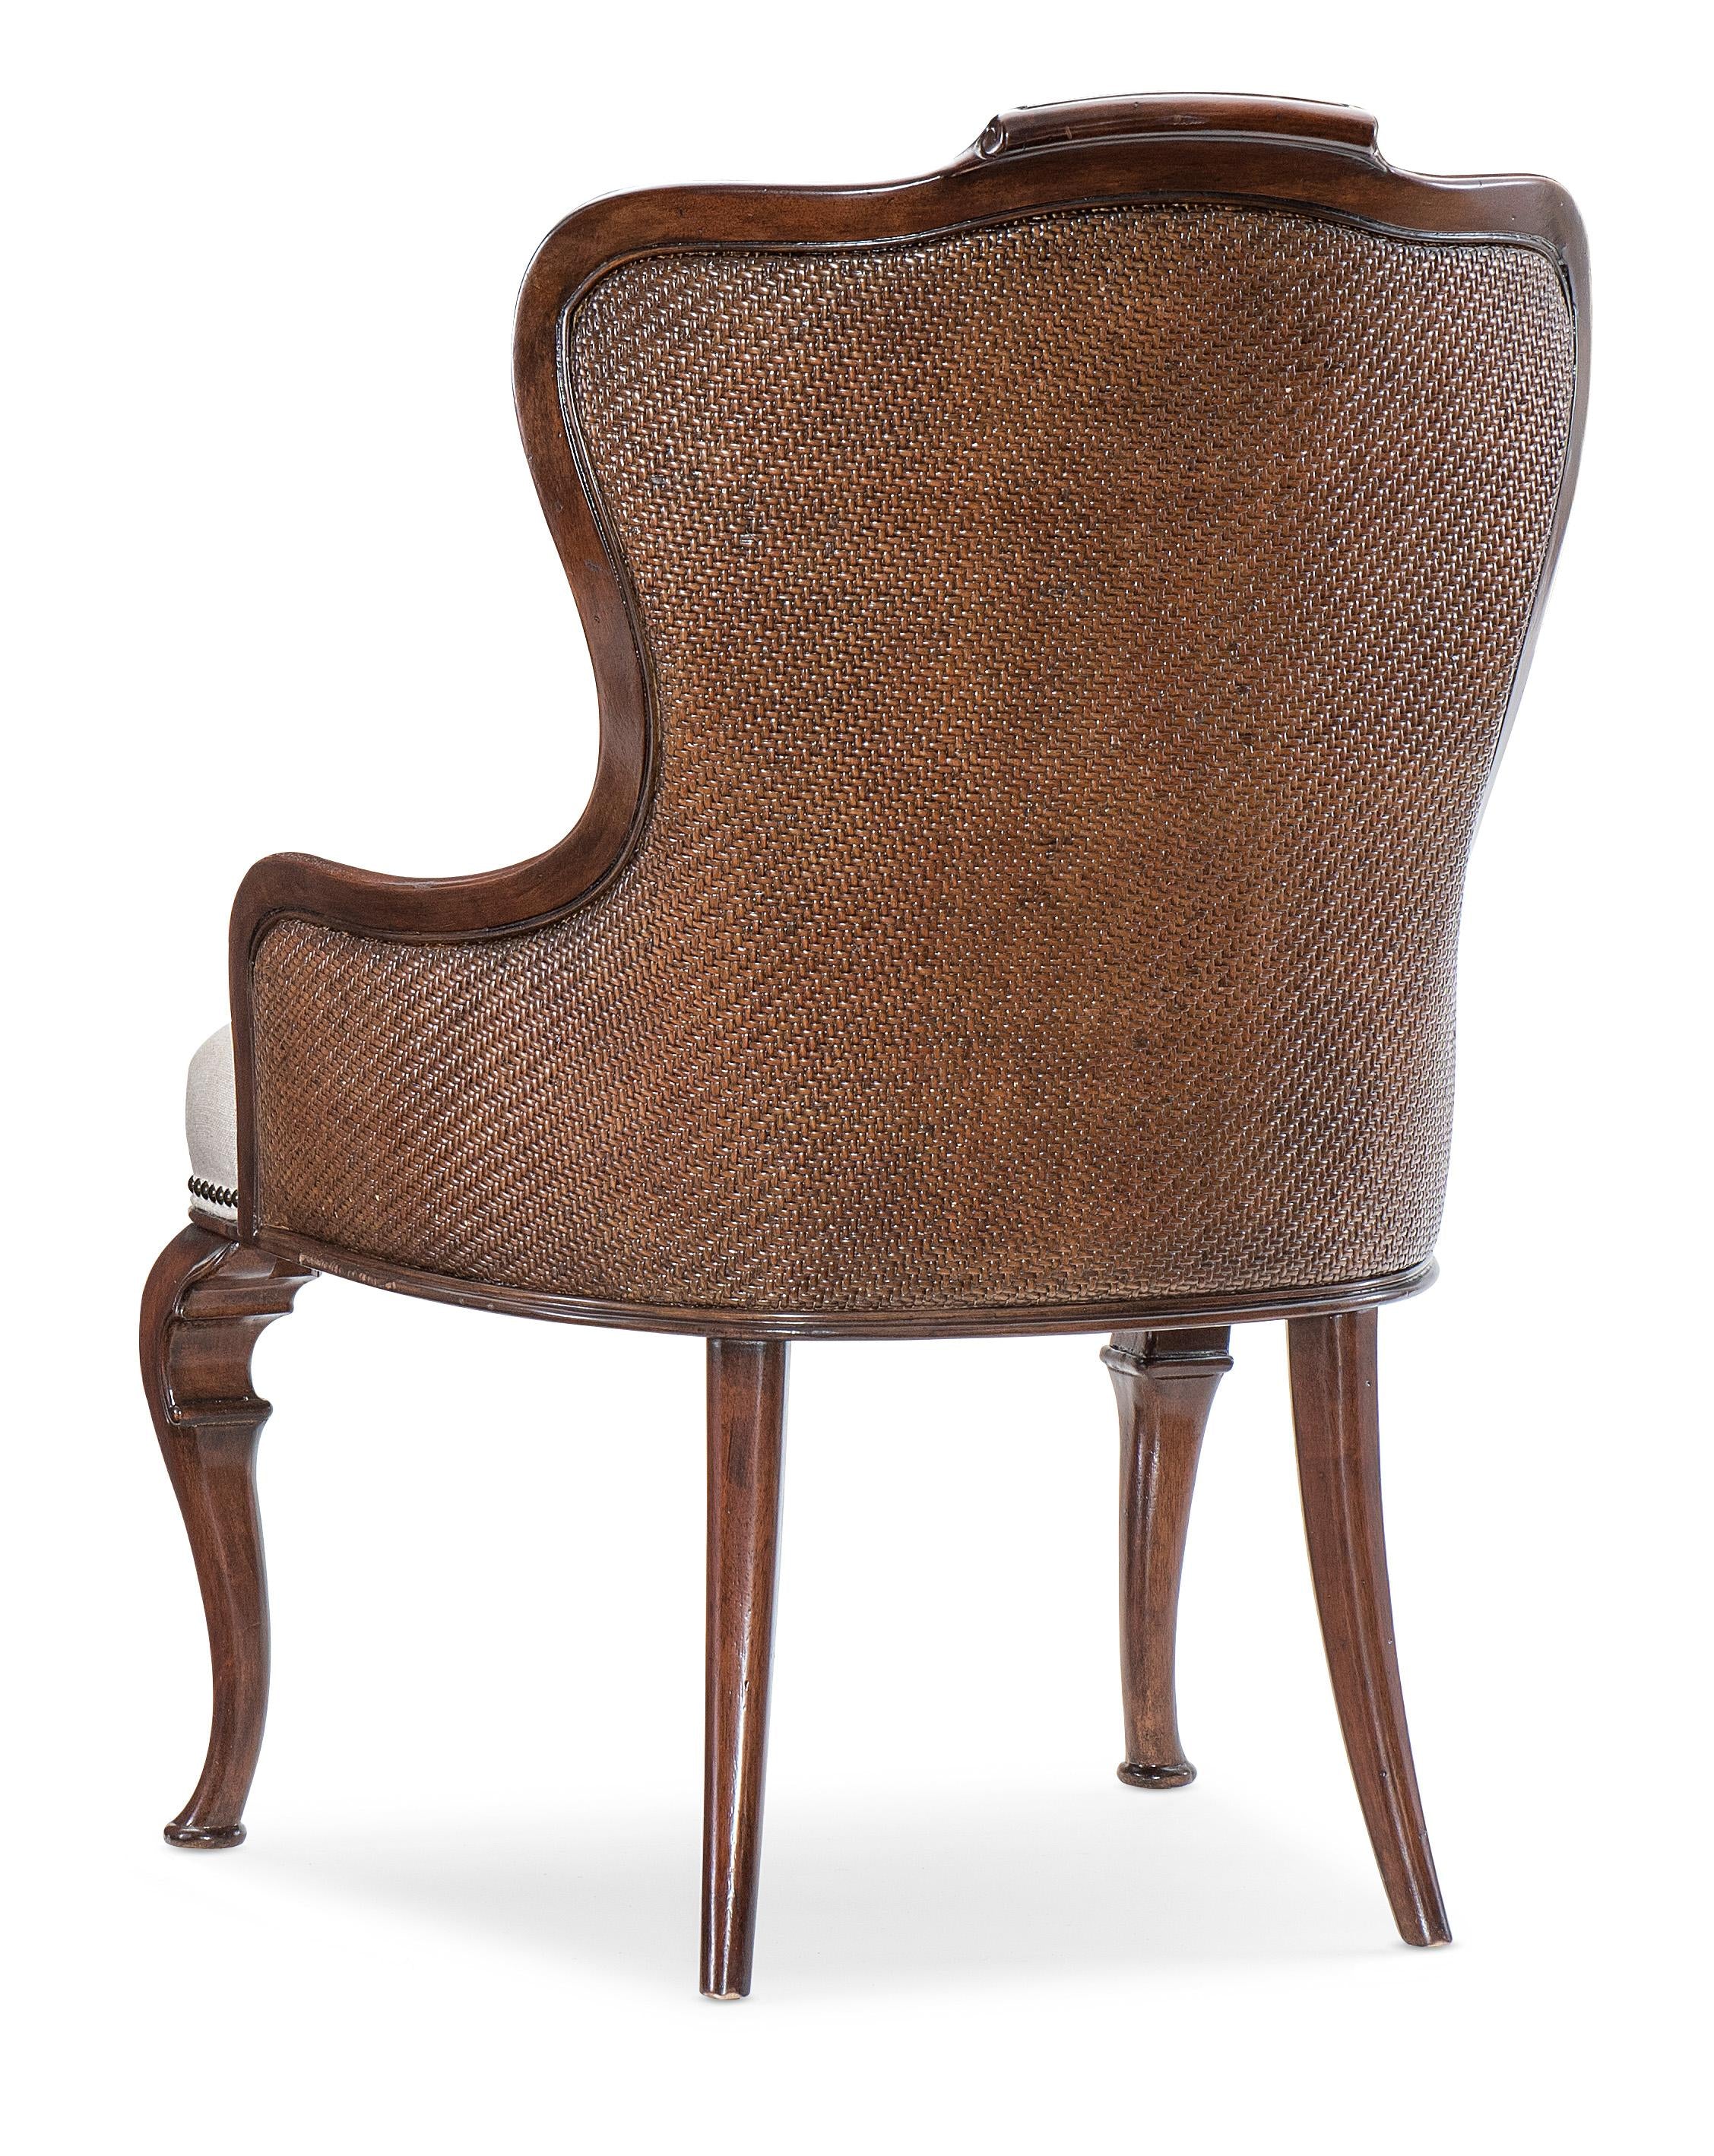 Charleston Upholstered Arm Chair